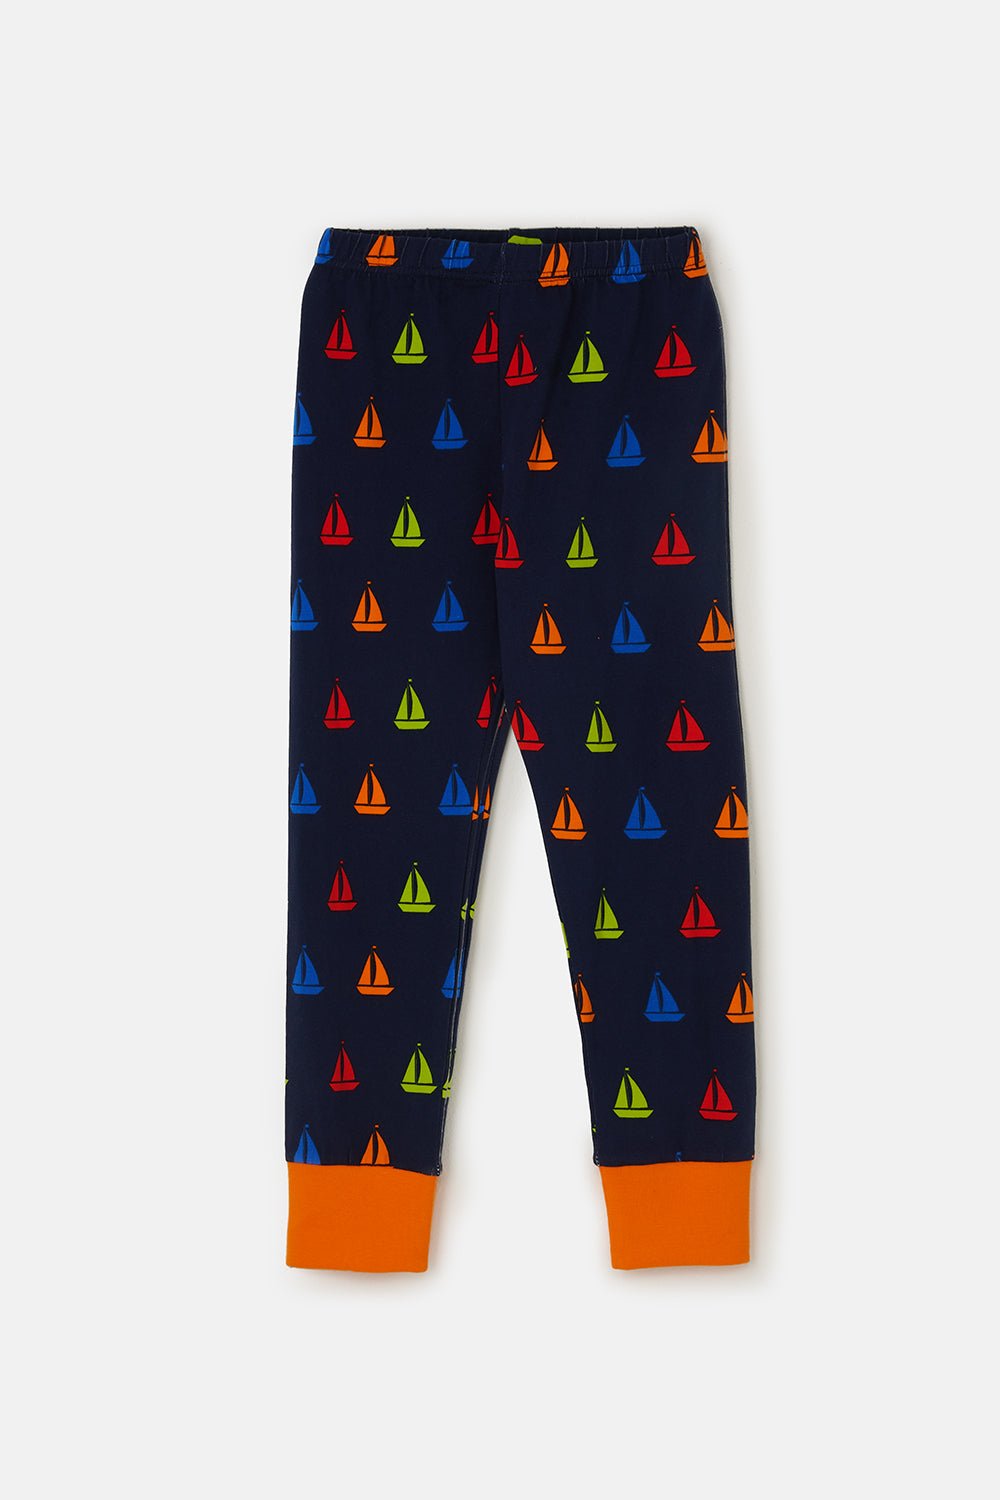 Kids' pyjamas, Navy Boat Print